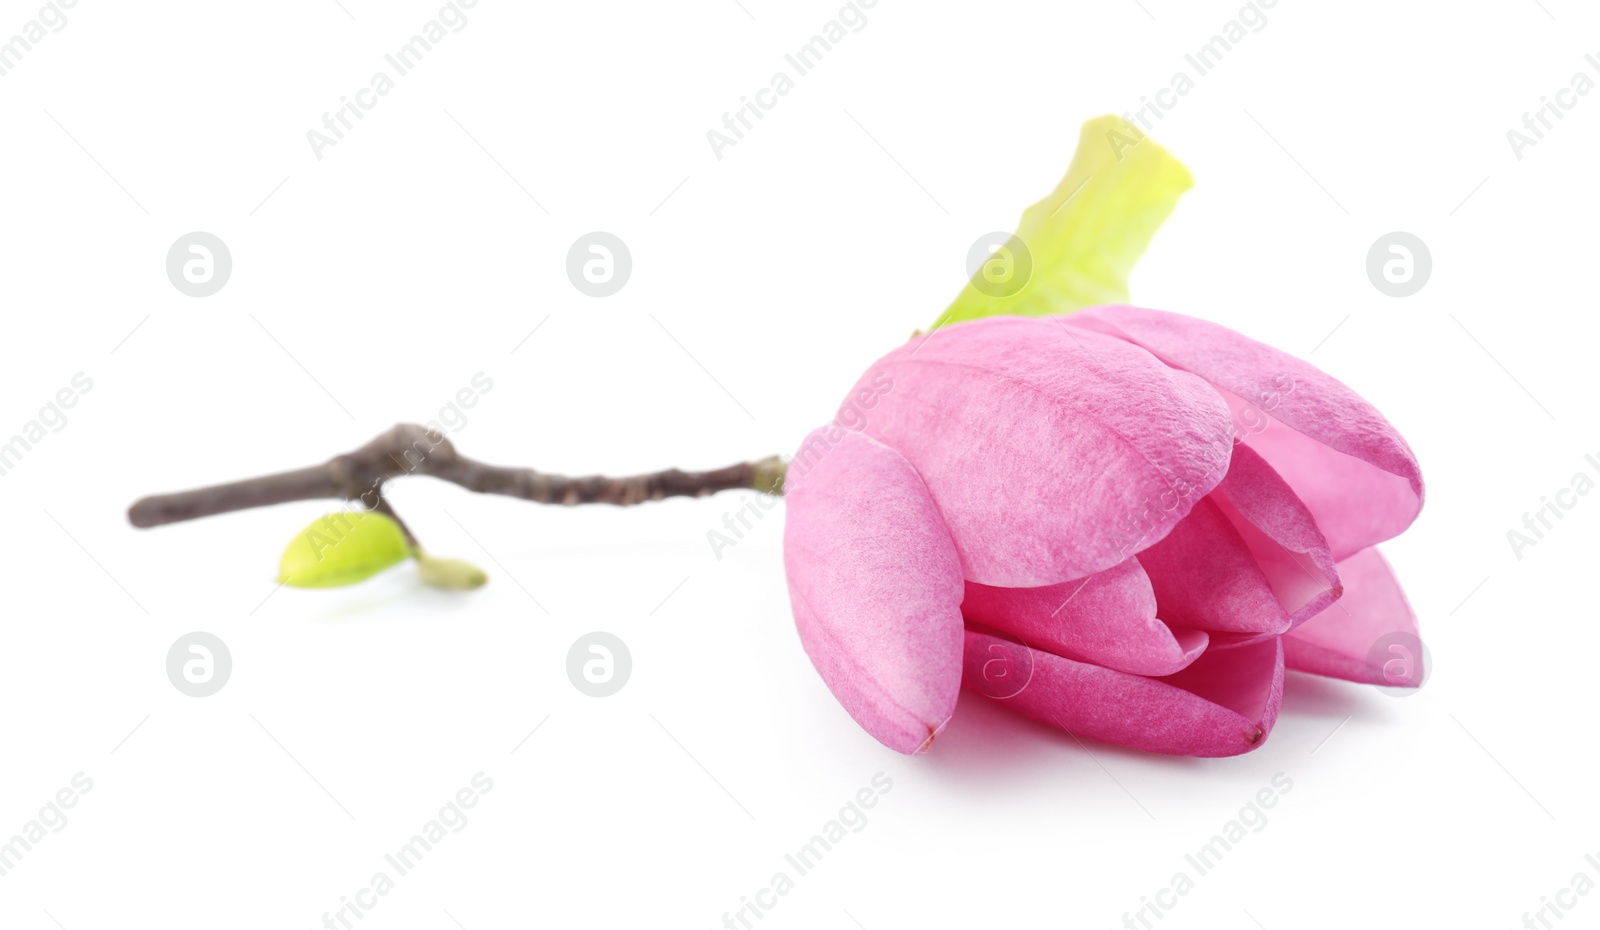 Photo of Beautiful pink magnolia flower isolated on white